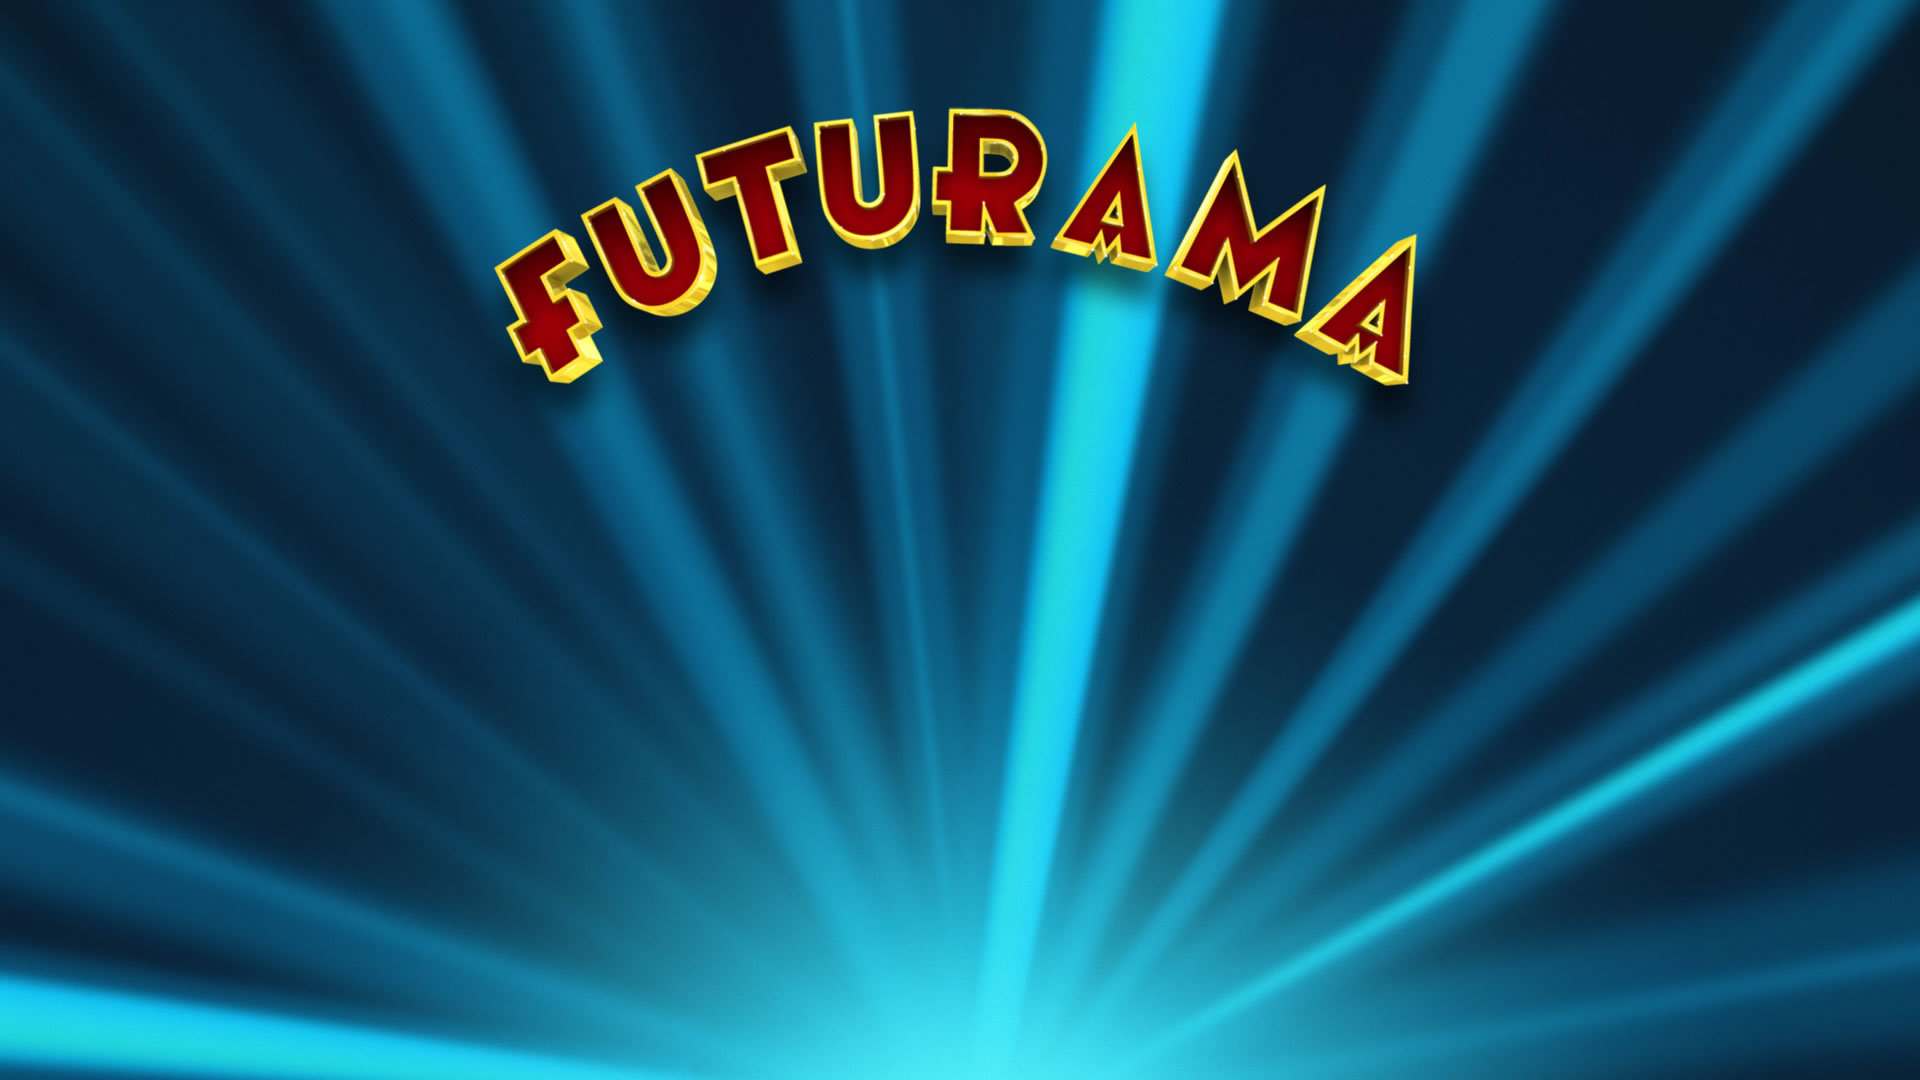 Free Futurama high quality wallpaper ID:253757 for hd 1920x1080 computer